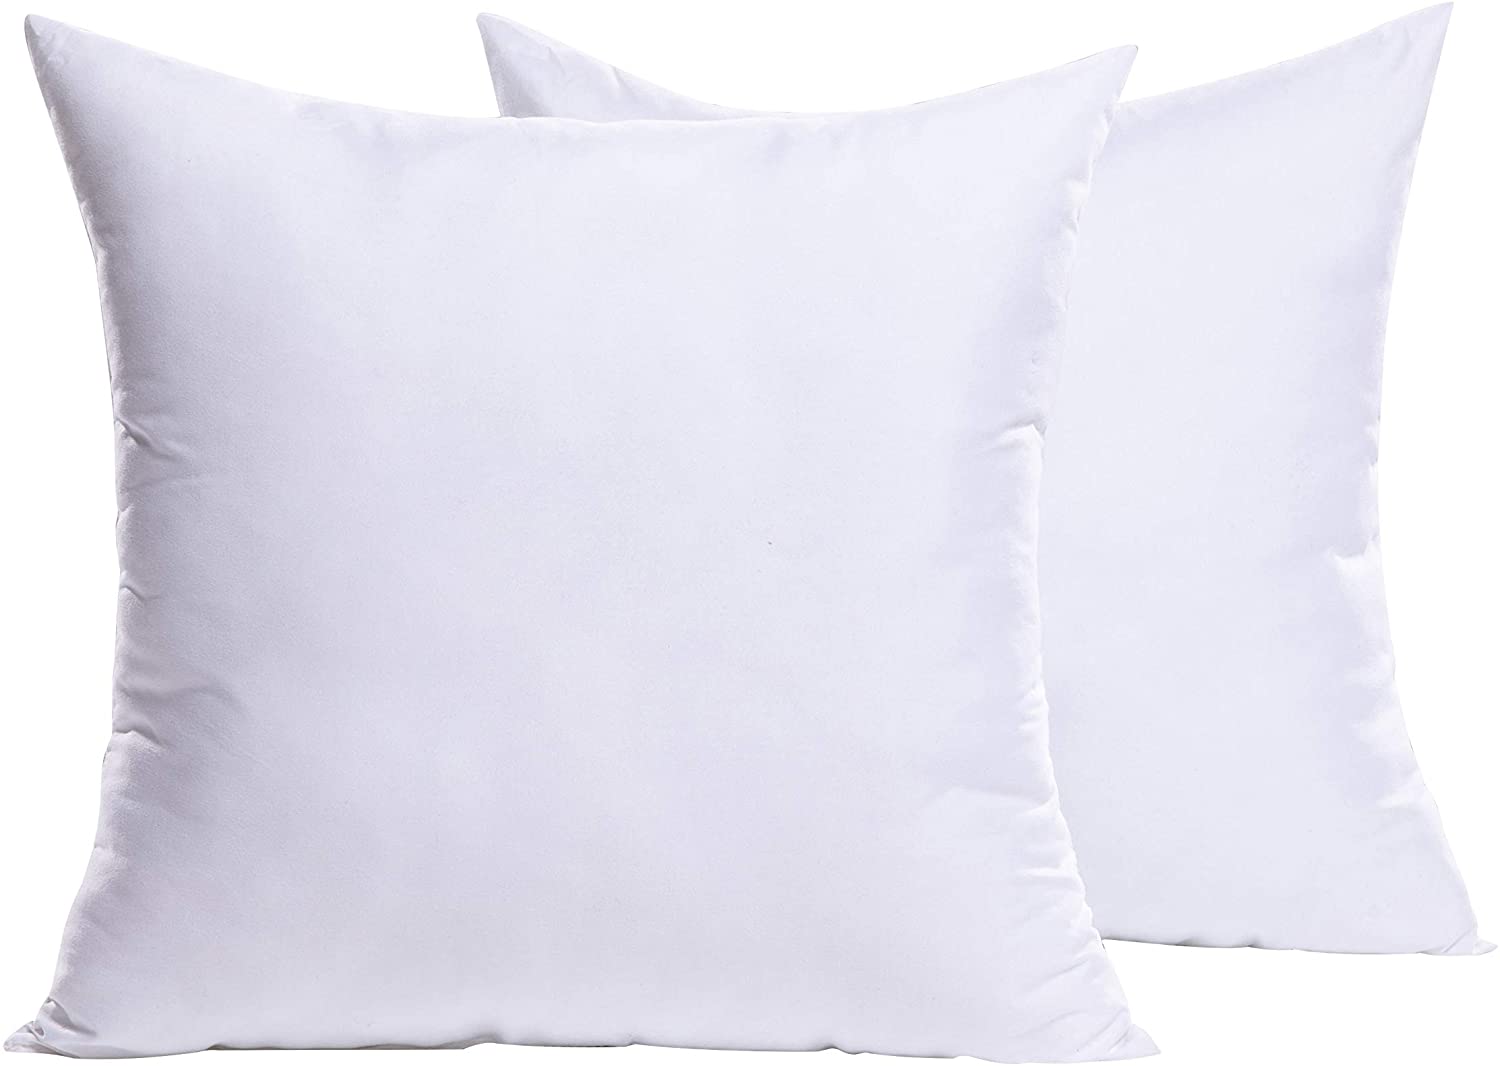  EDOW Throw Pillow Insert, Set of 2 Down Alternative